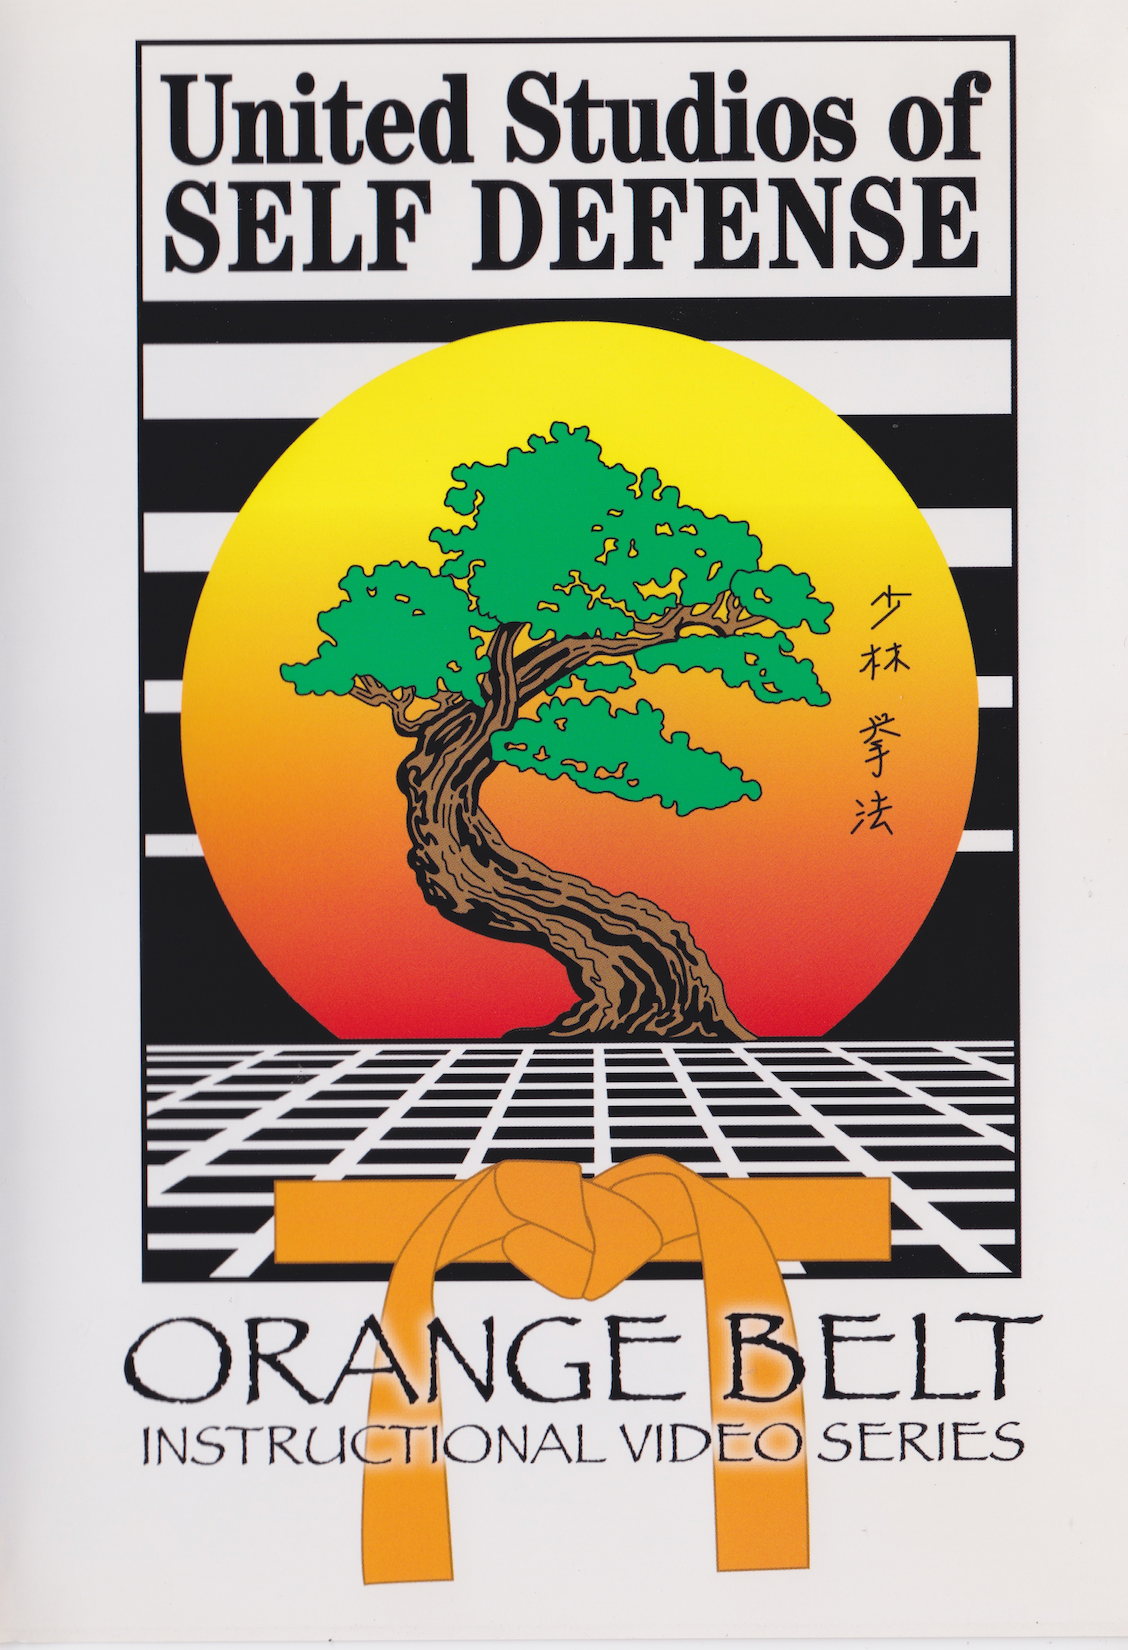 United Studios of Self Defense Orange Belt DVD by Charles Mattera (Preowned)